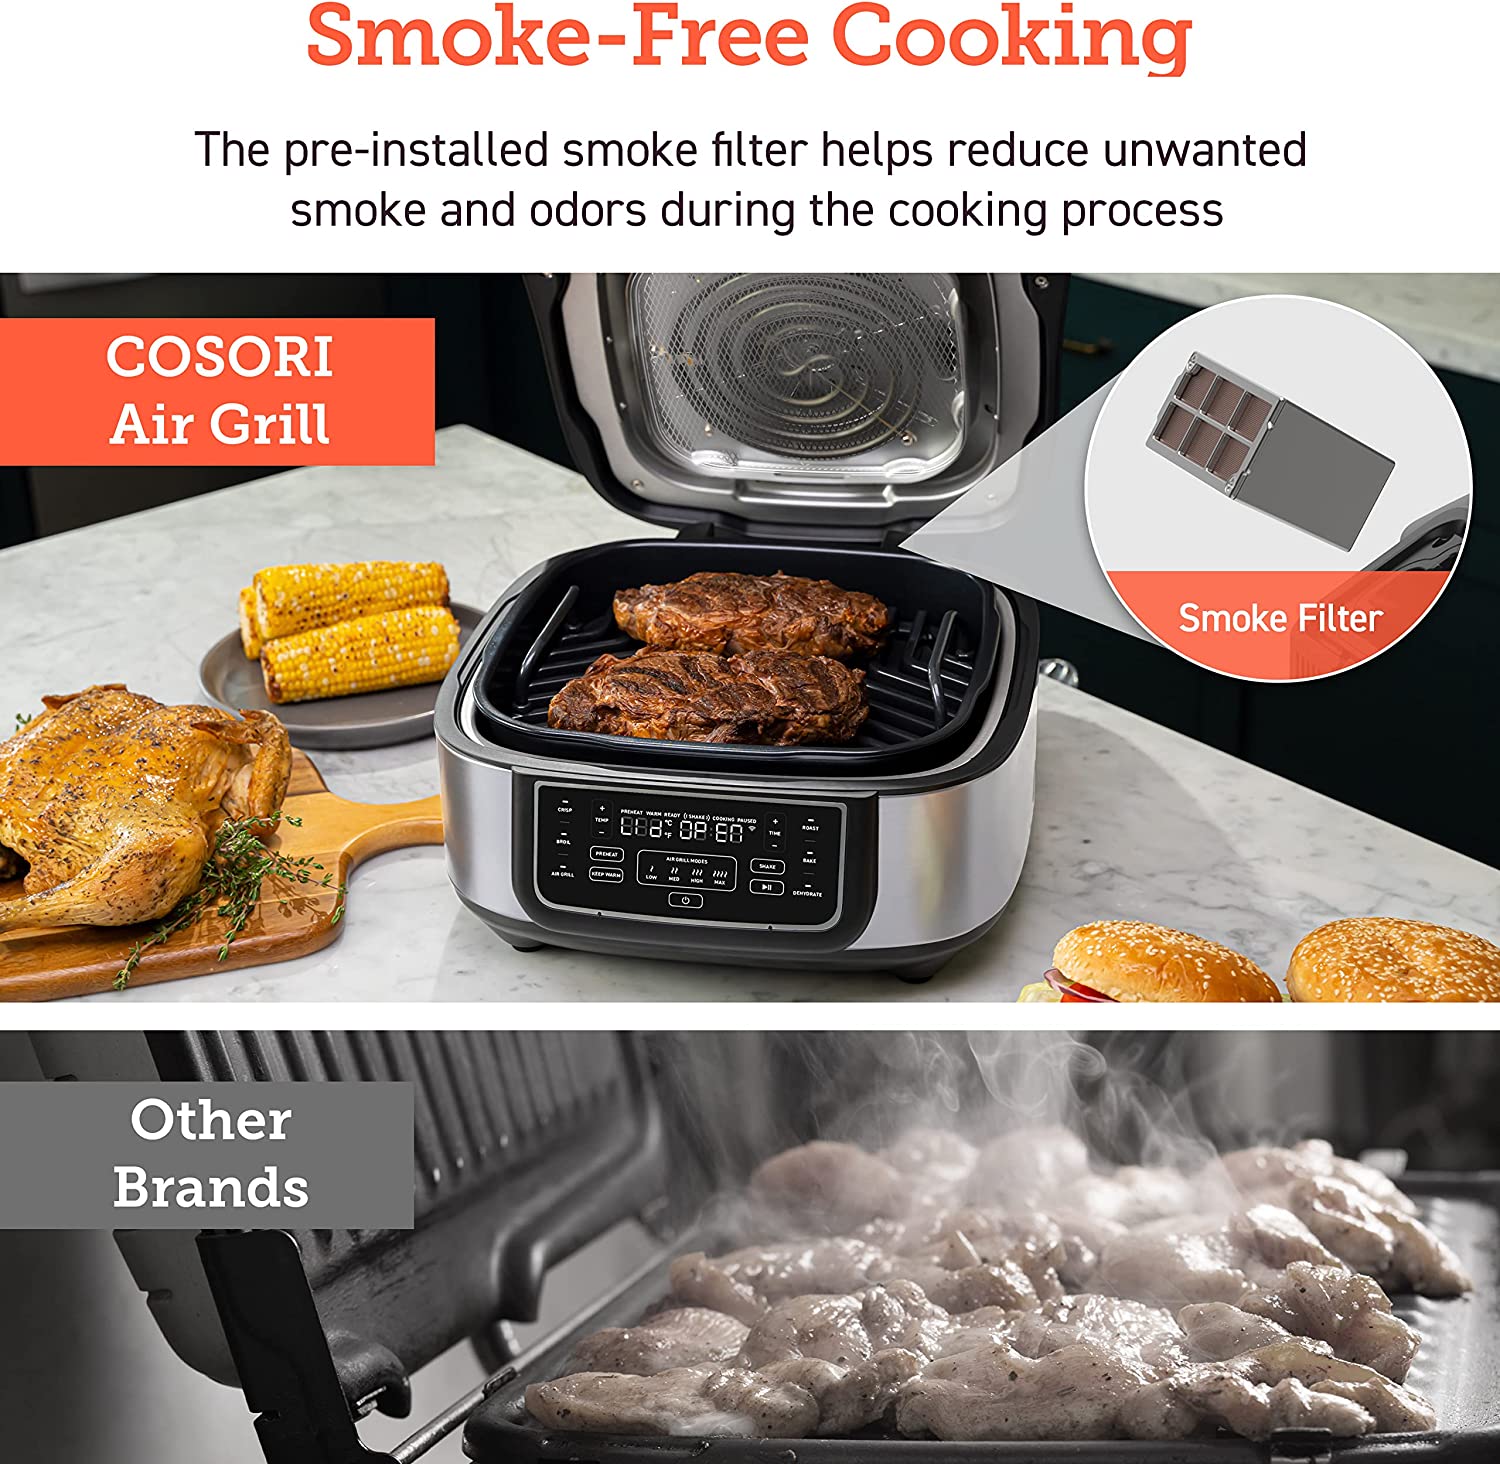 Aeroblaze® Smart Indoor Grill with Bonus Items – COSORI